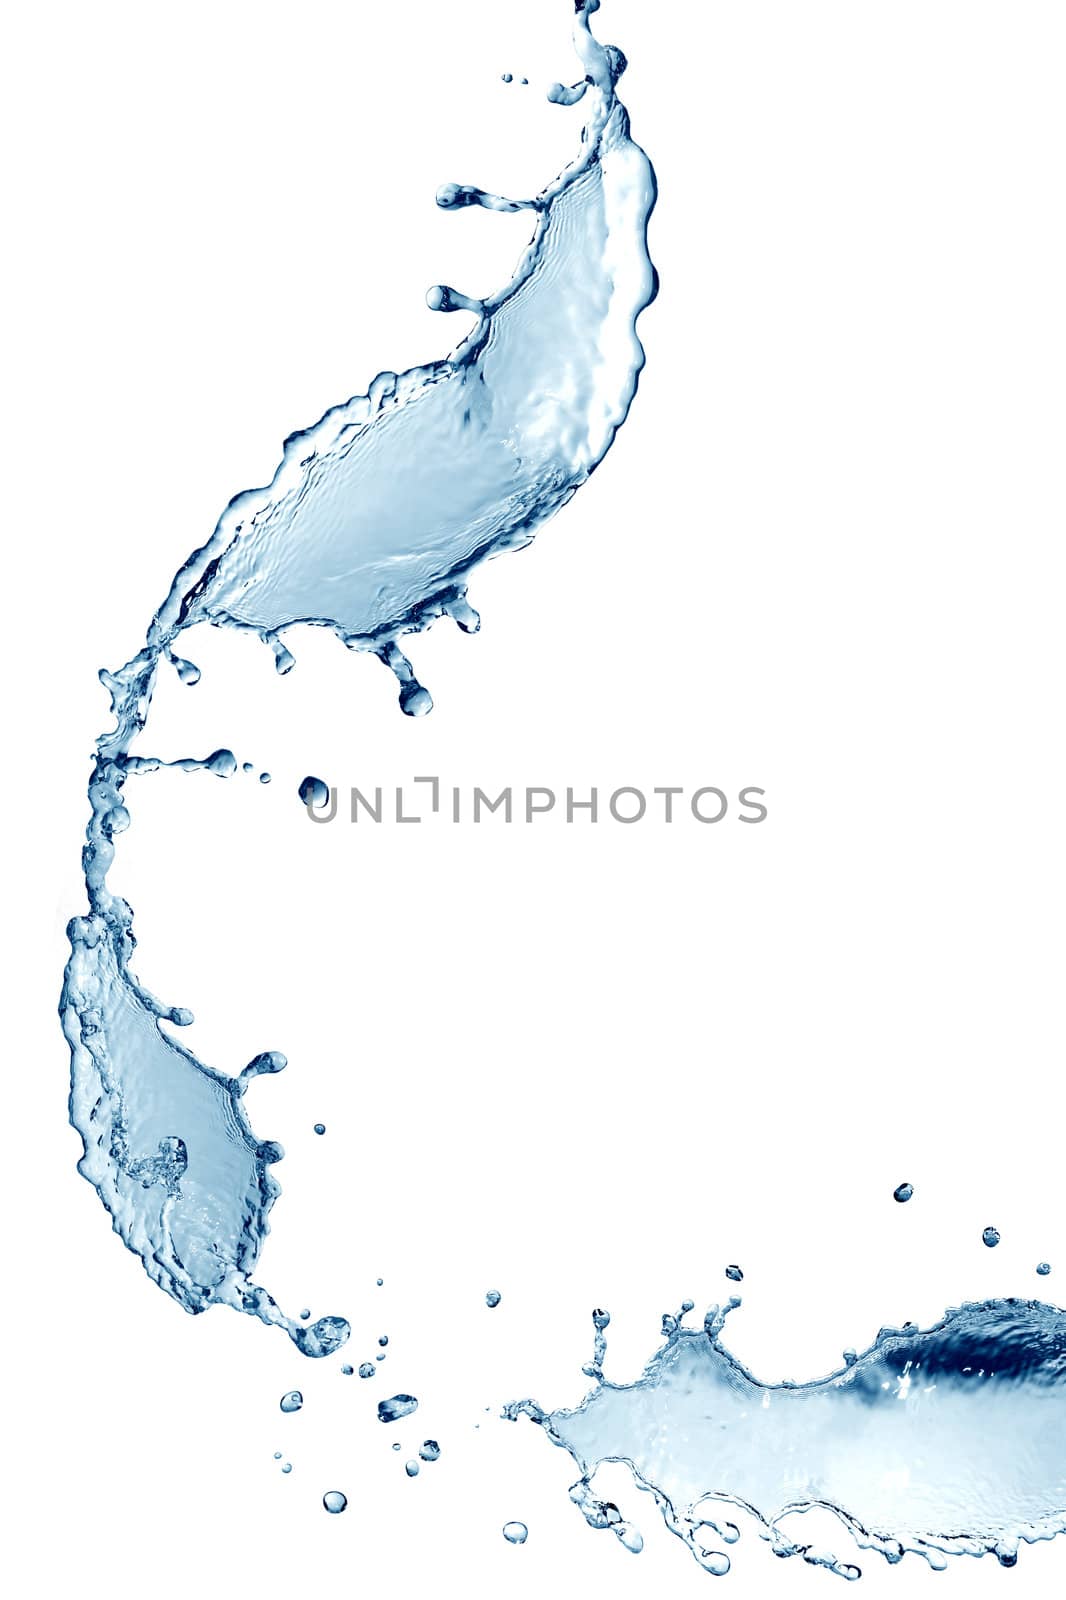 Splashing Water by kvkirillov